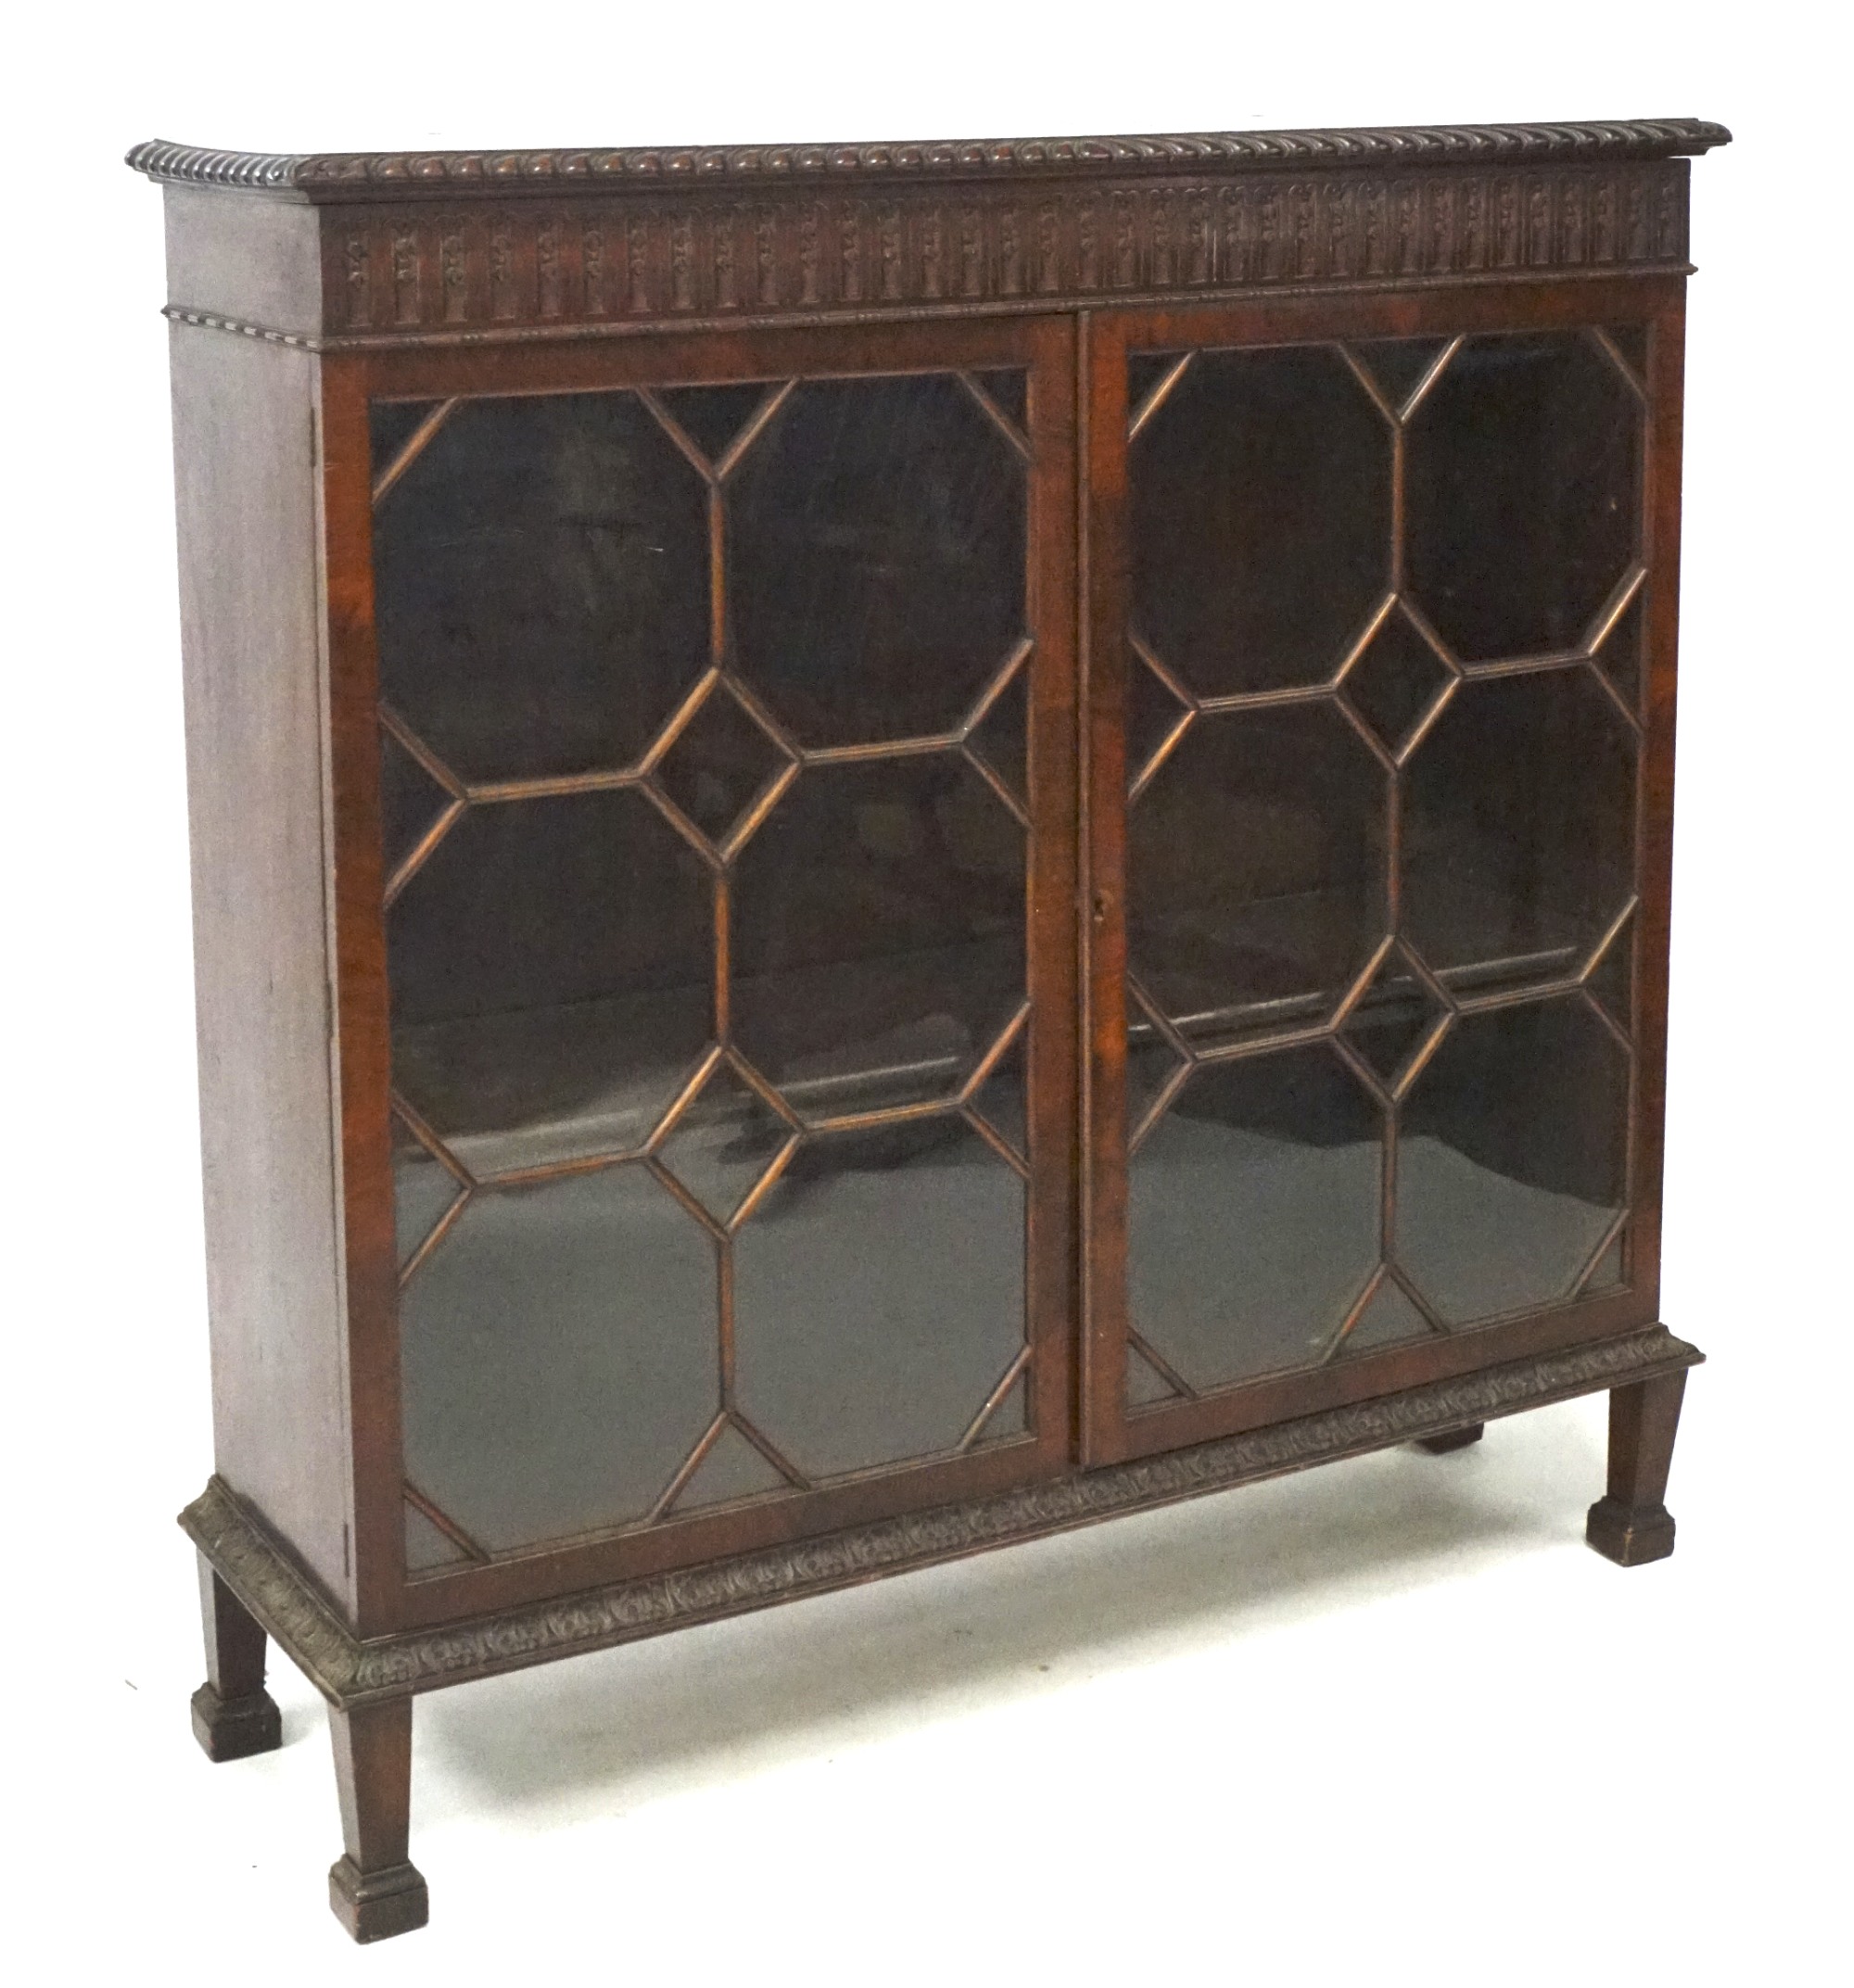 A 20th century mahogany veneered display cabinet.